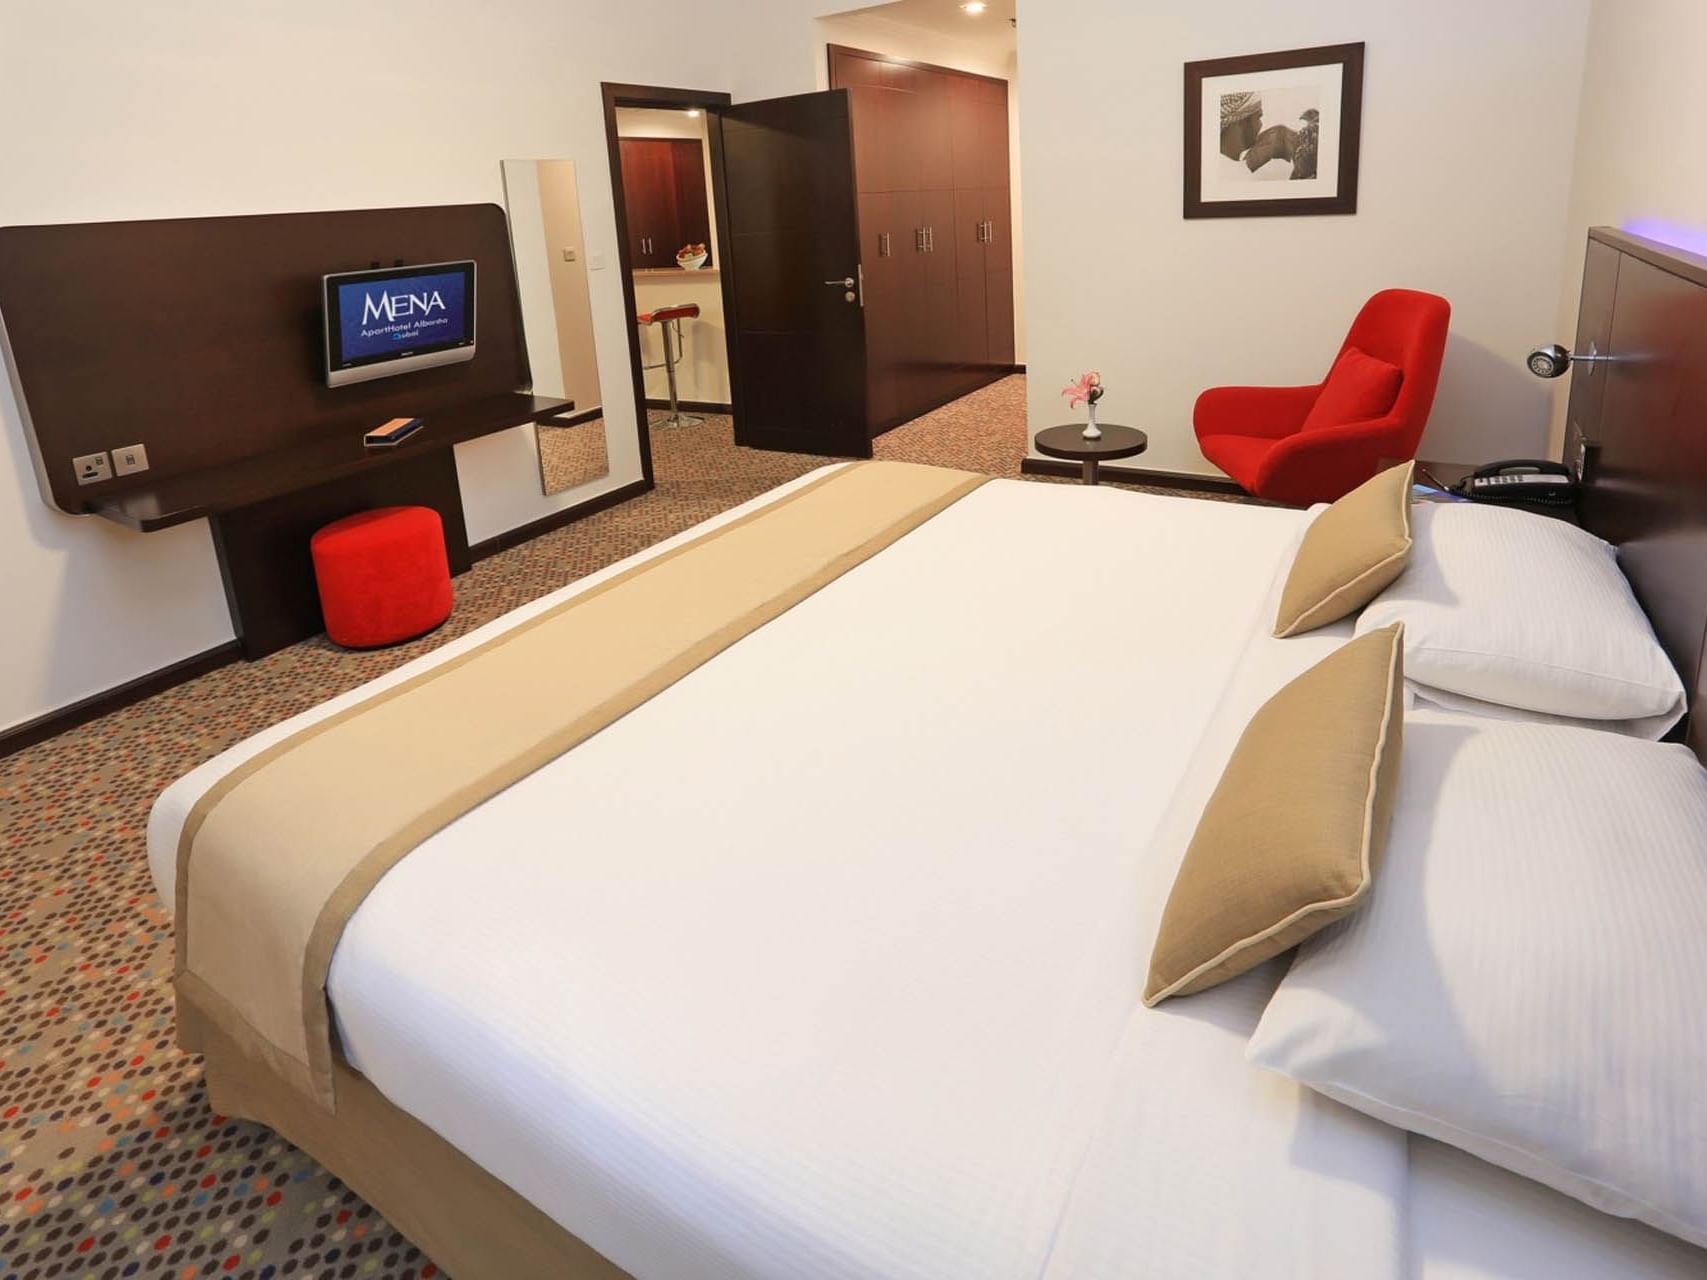 King Bed in One bedroom Suite at Mena ApartHotel Albarsha Dubai